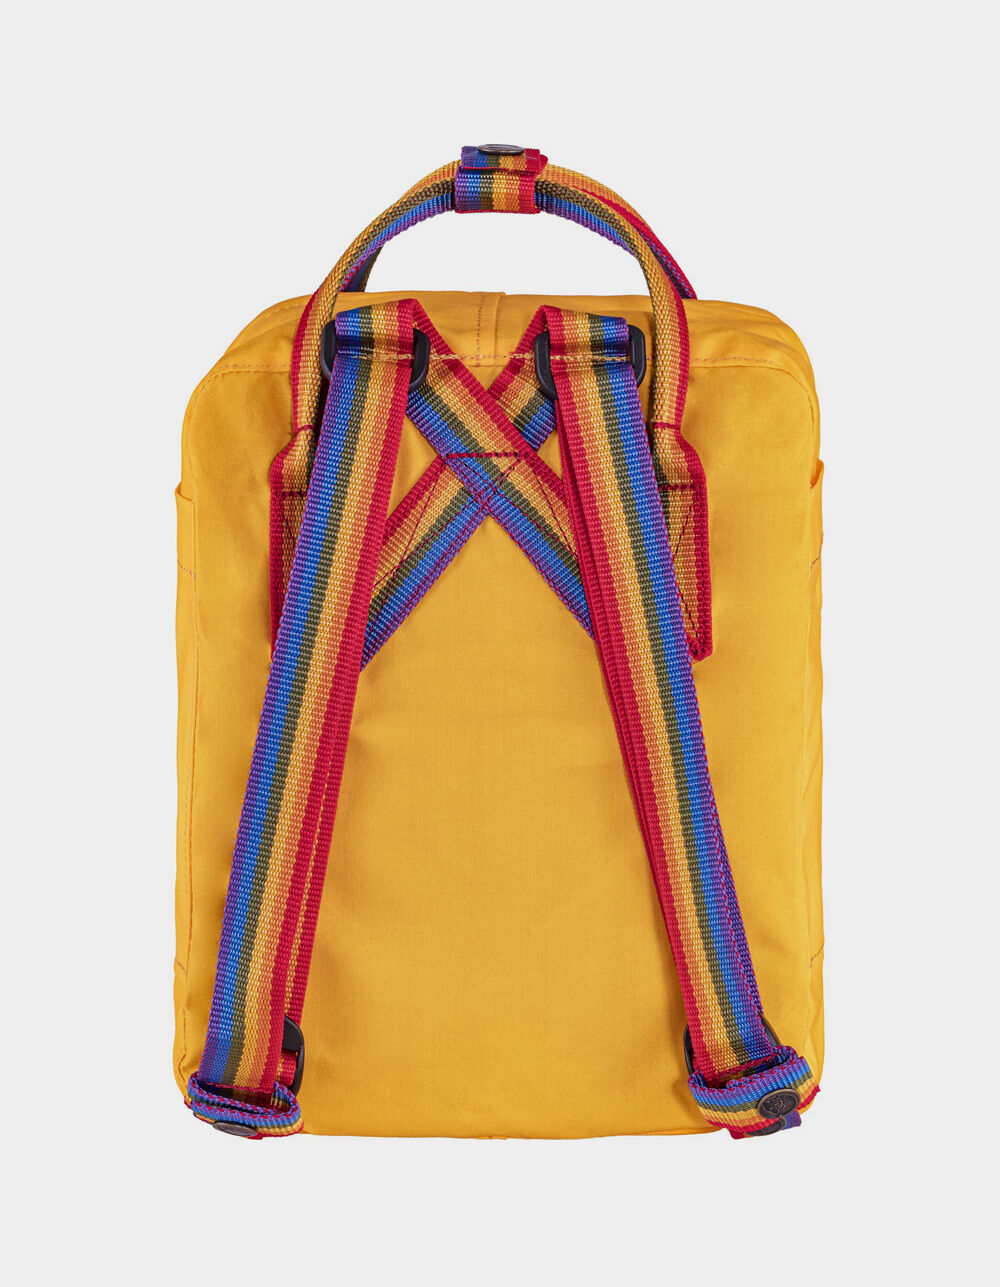 Yellow Kanken Mini Backpack